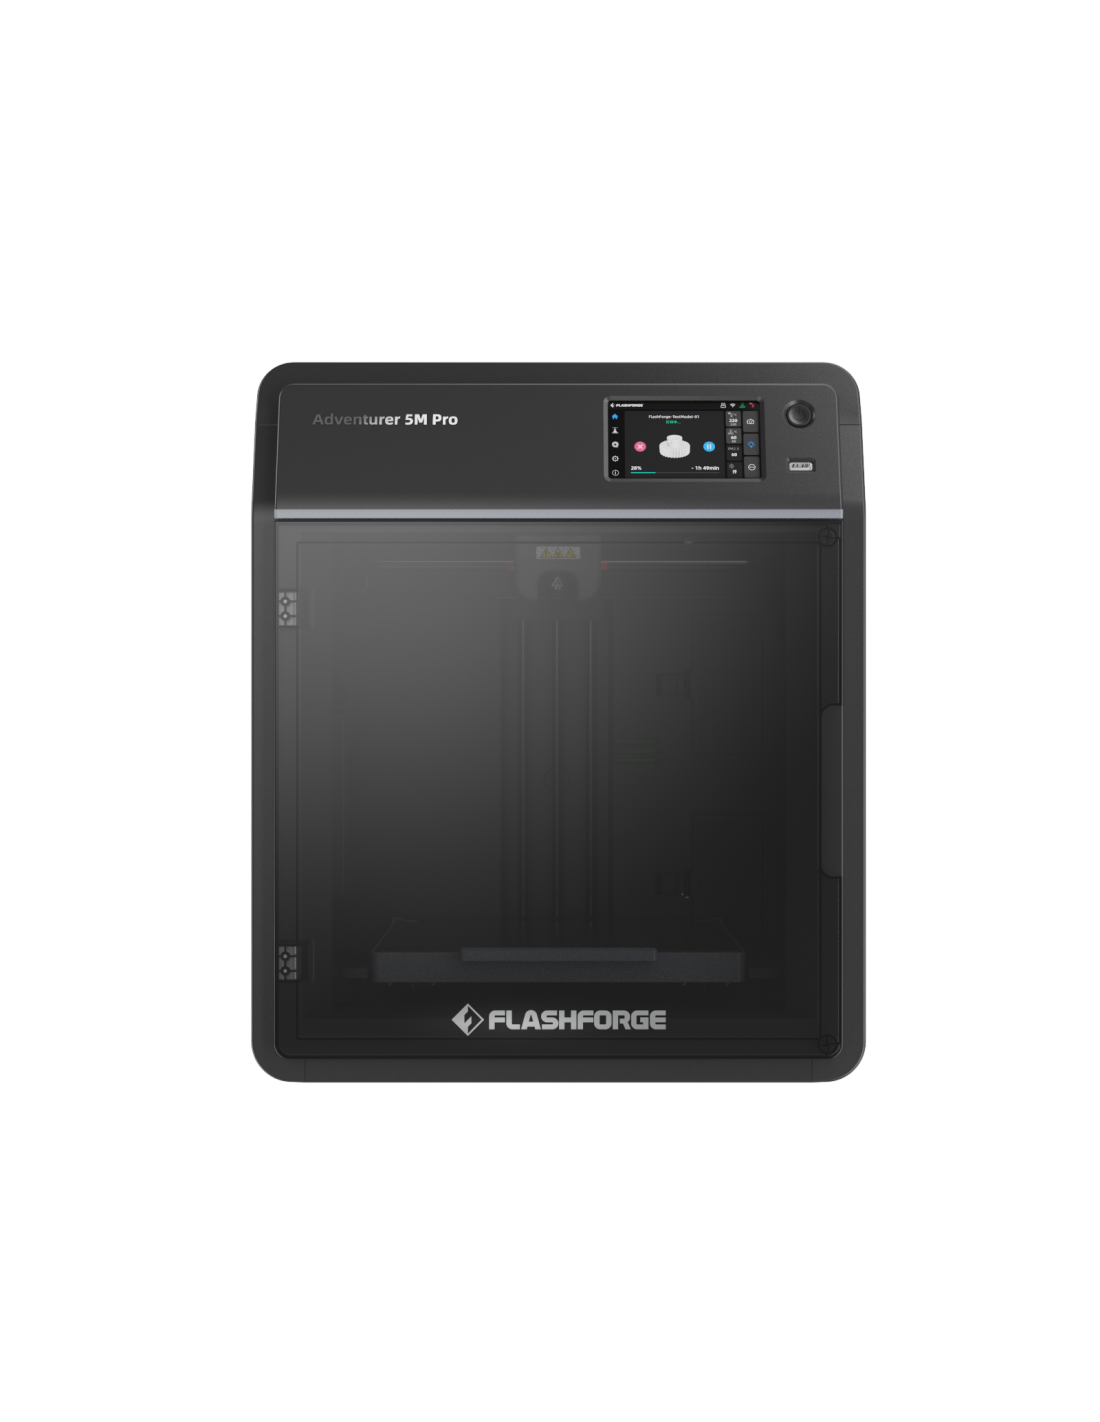 Flashforge Adventurer 5M Pro 3D Printer